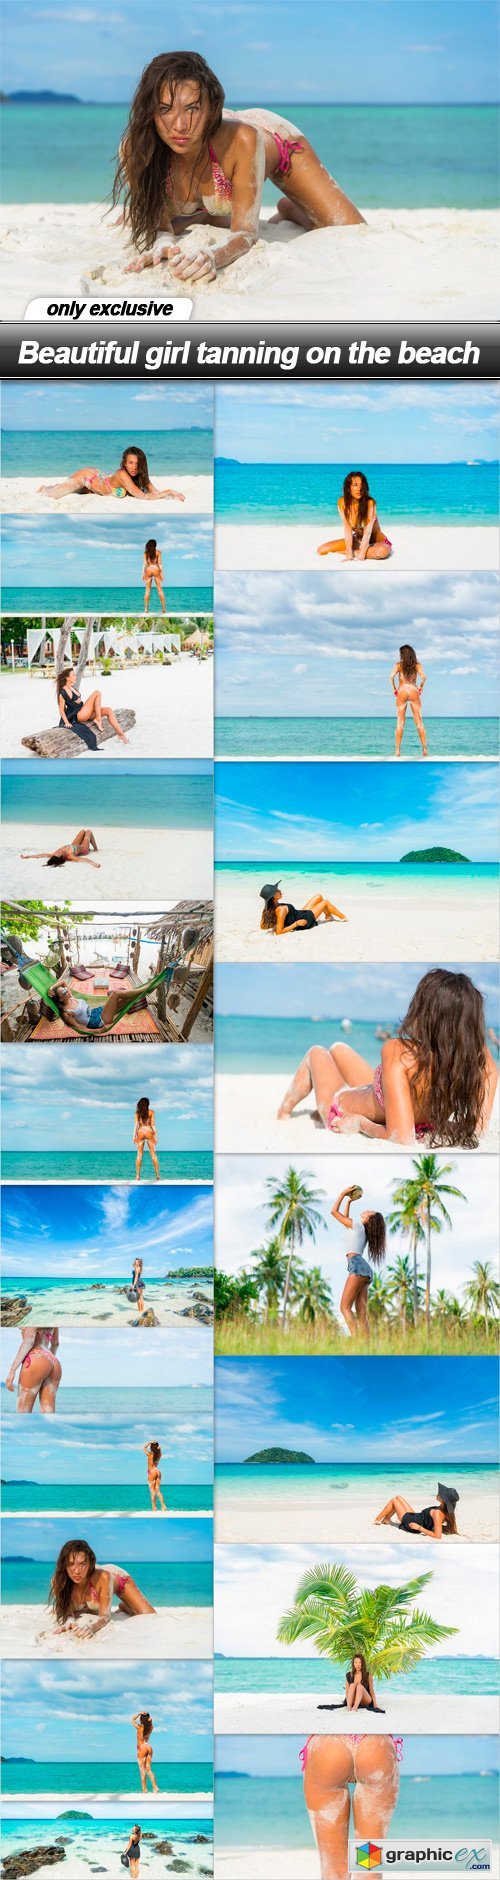 Beautiful girl tanning on the beach - 20 UHQ JPEG